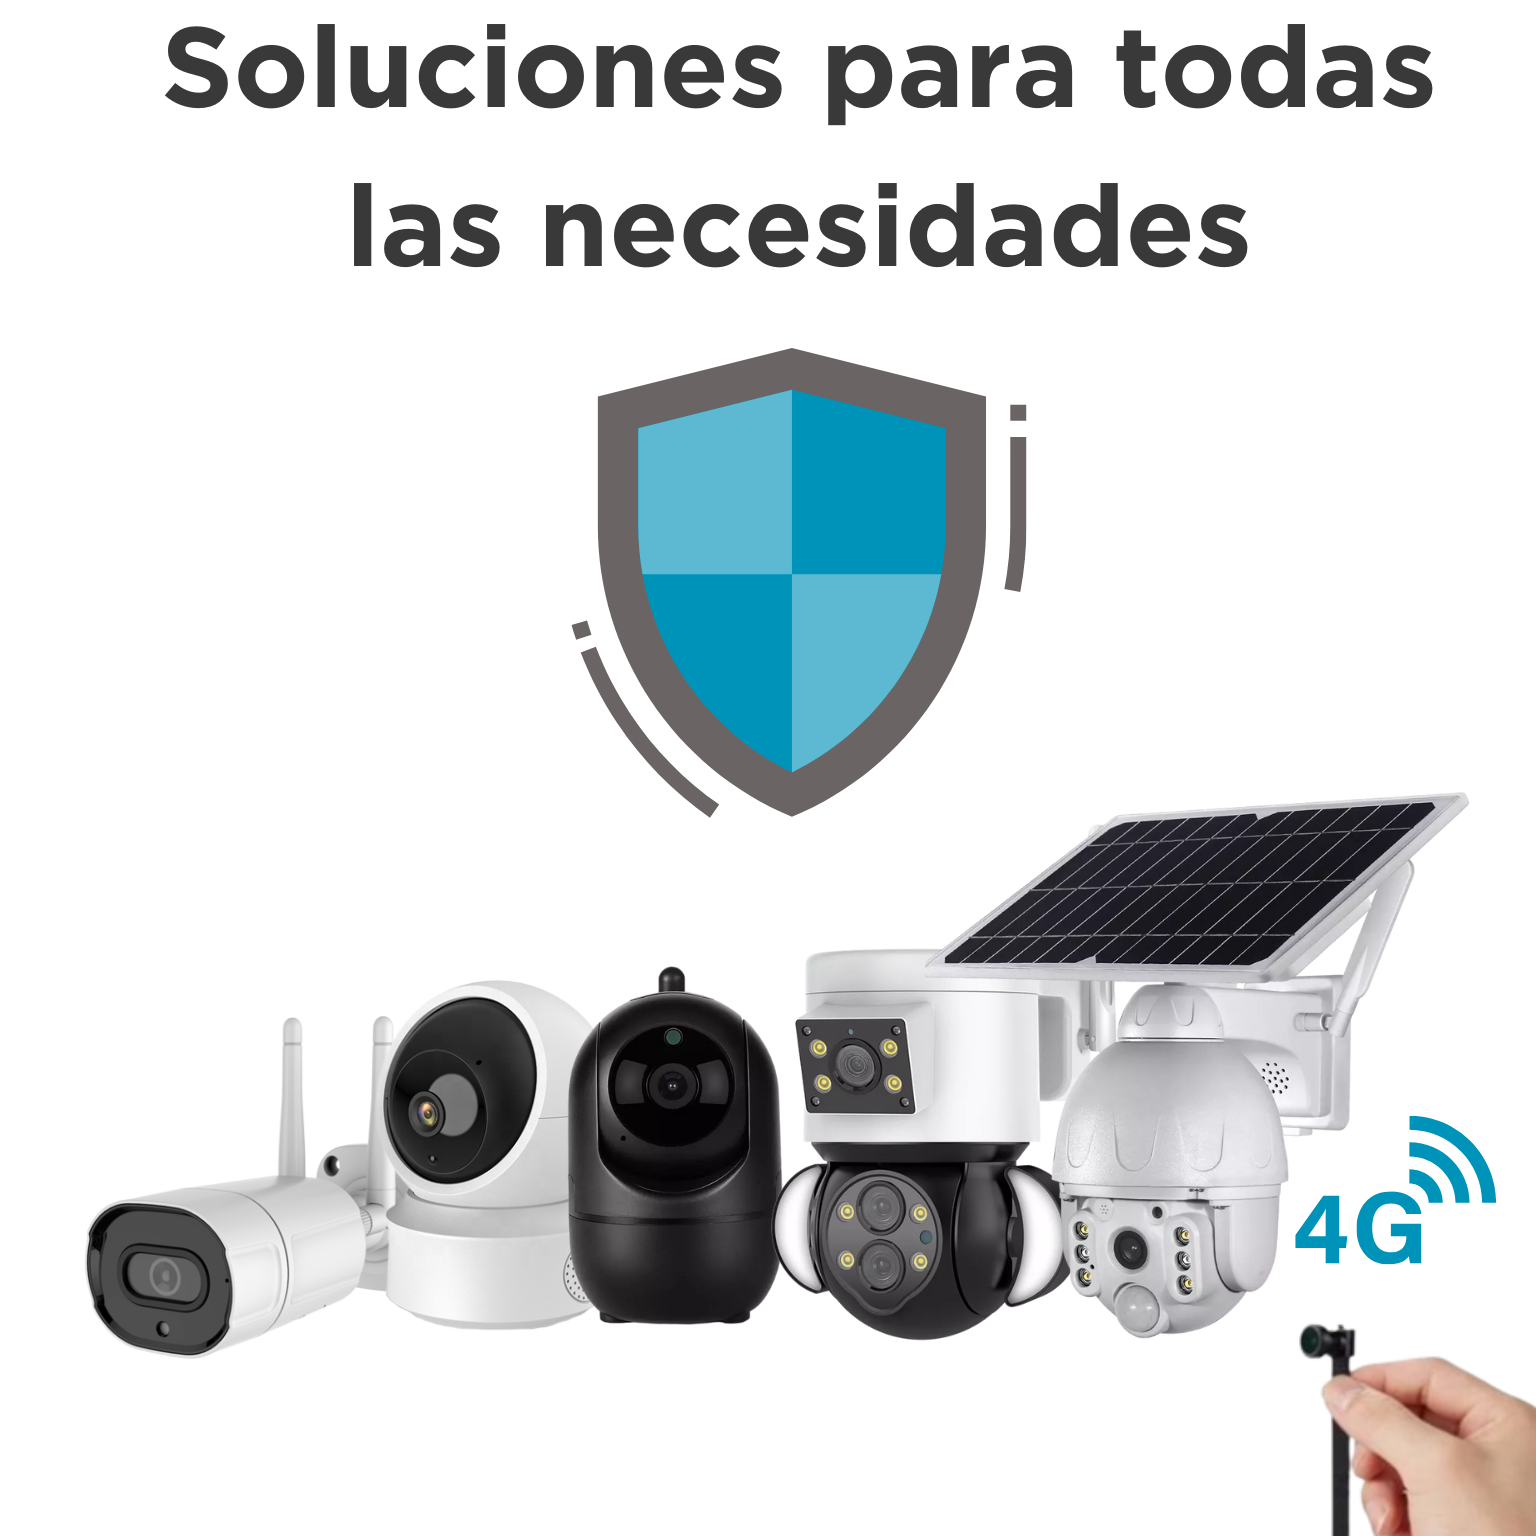 CAMARA SOLAR WIFI 4G TIPO PTZ: seguridad y tranquilidad para tu hogar